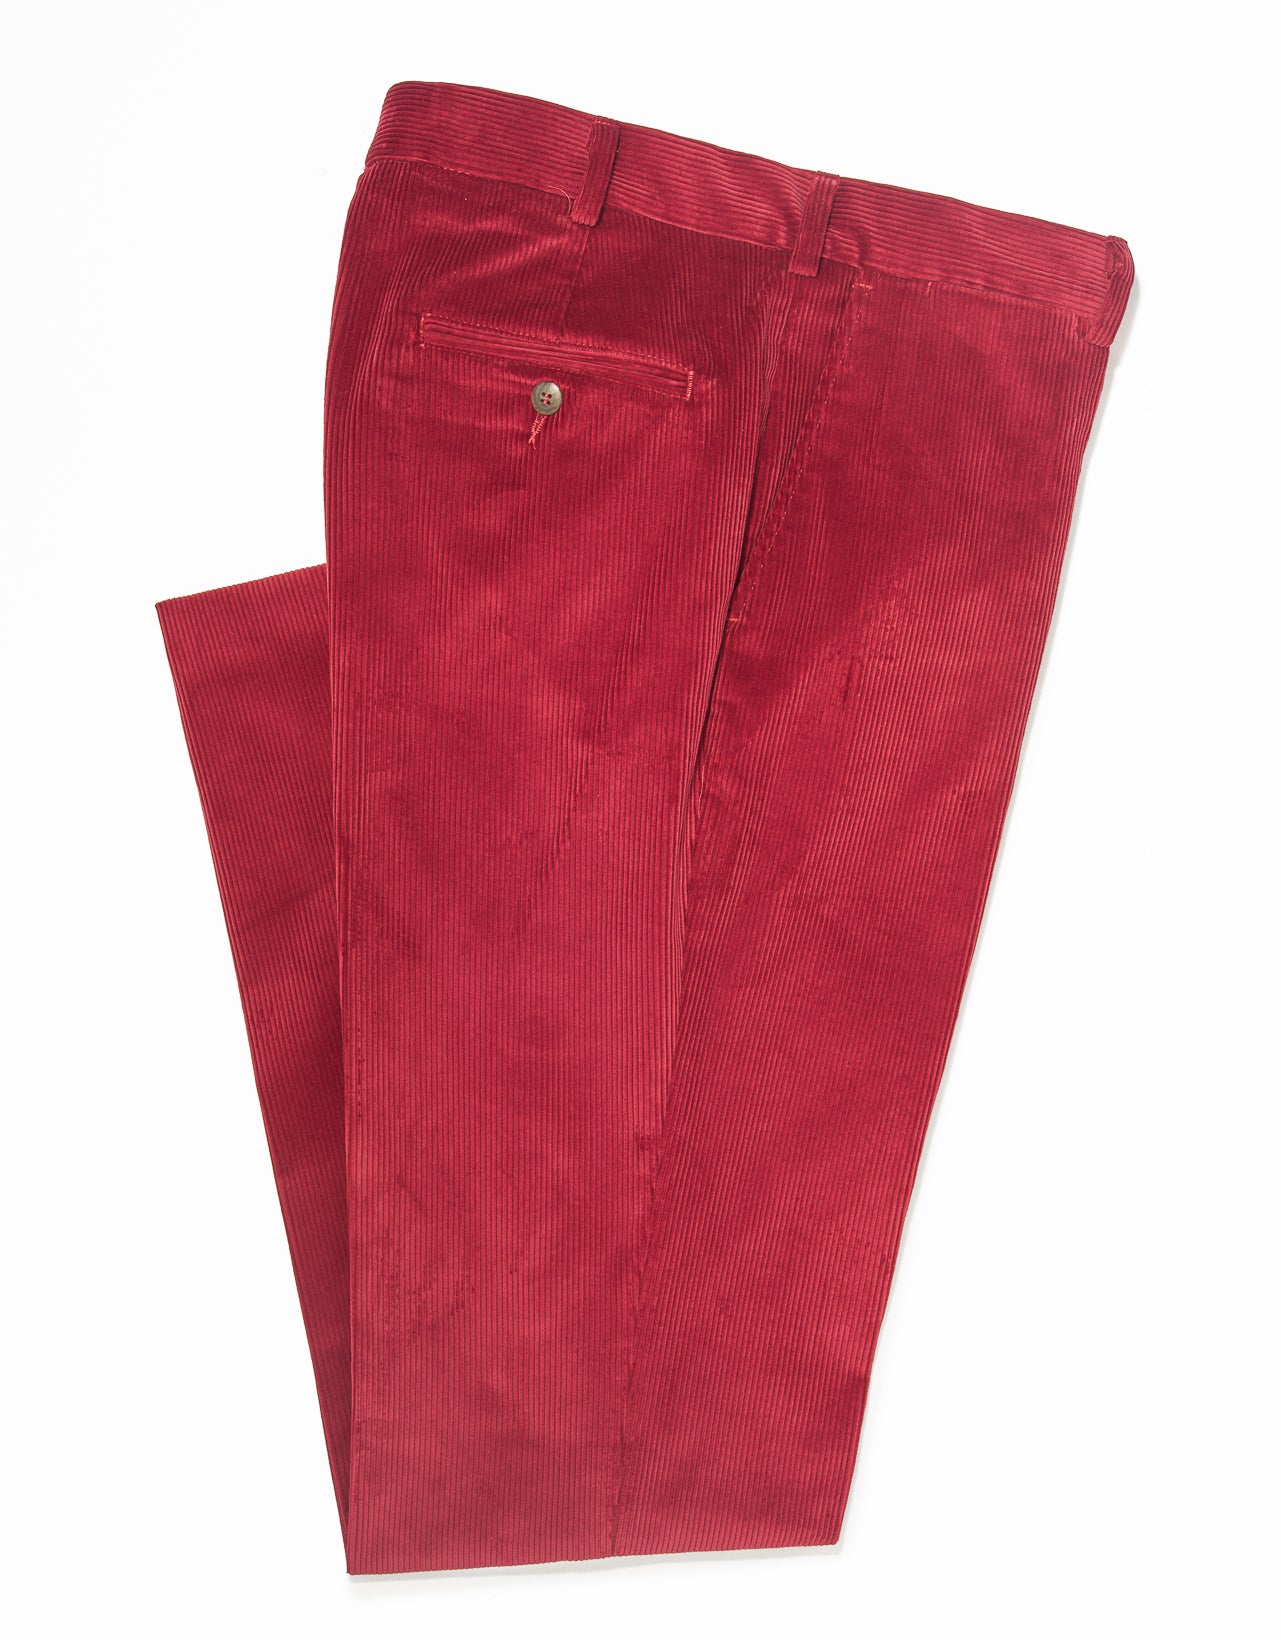 Classic Corduroy Pants - Red